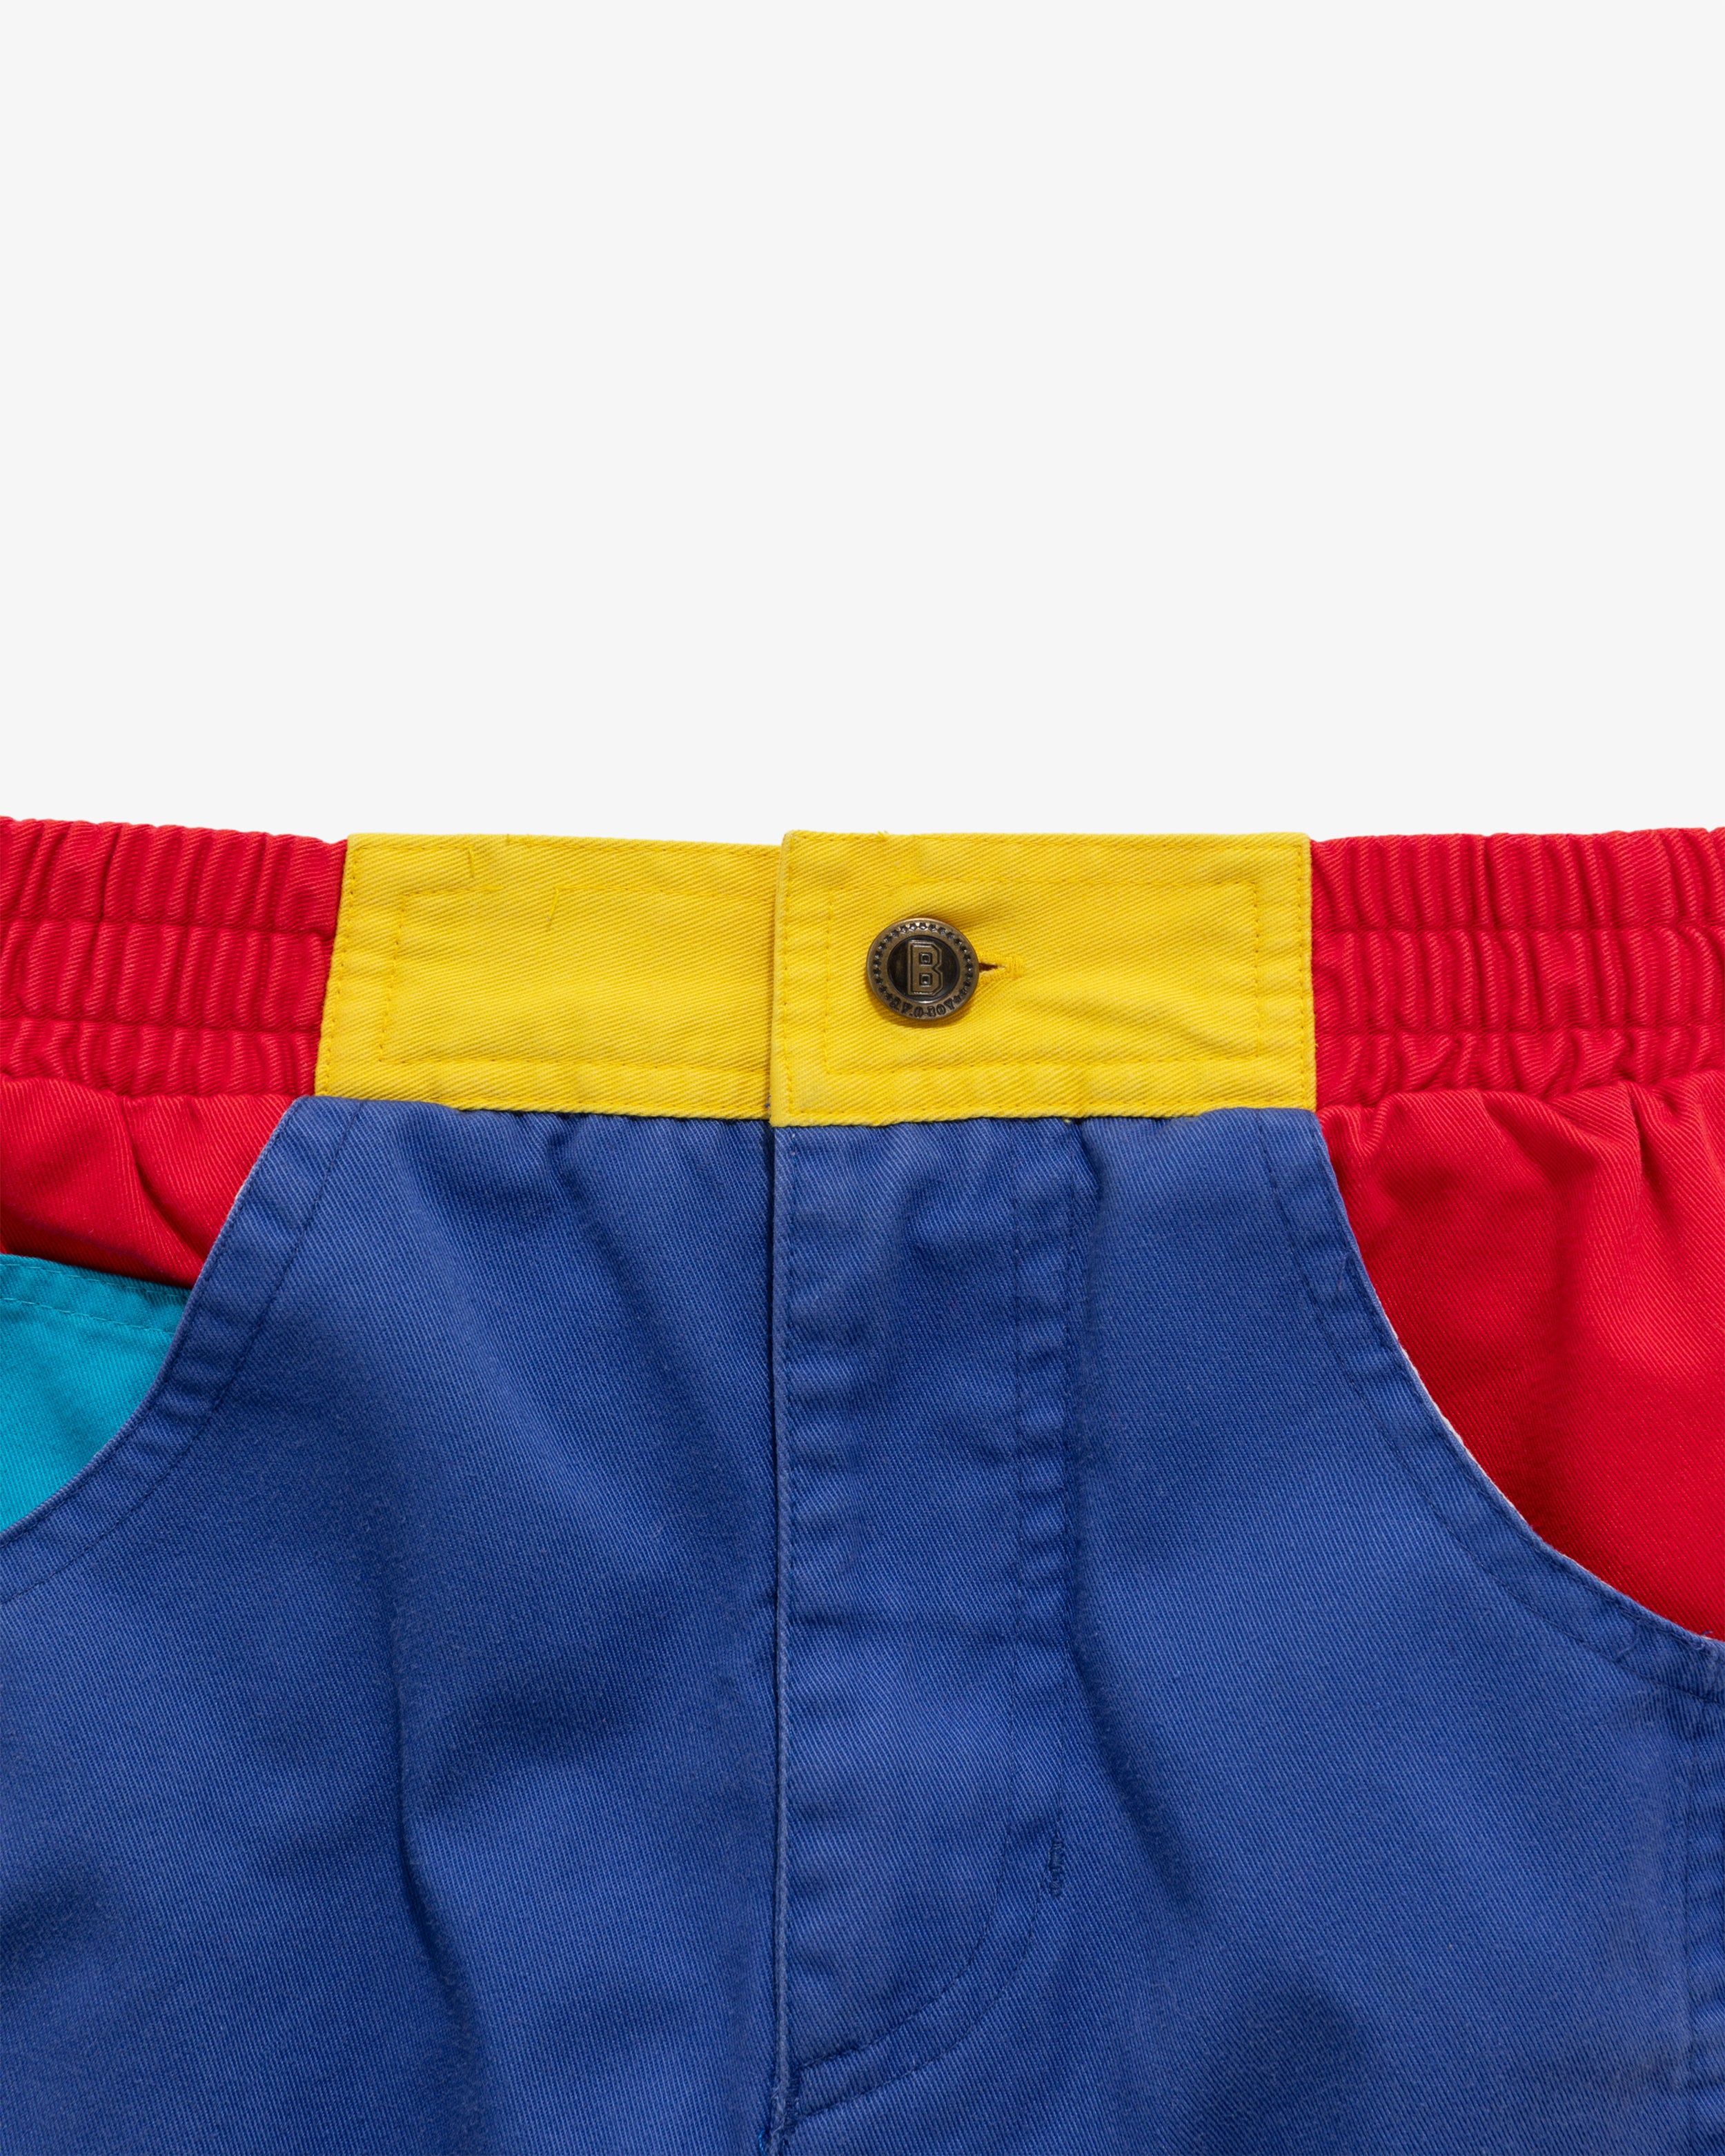 Vintage Kids Color Block Shorts